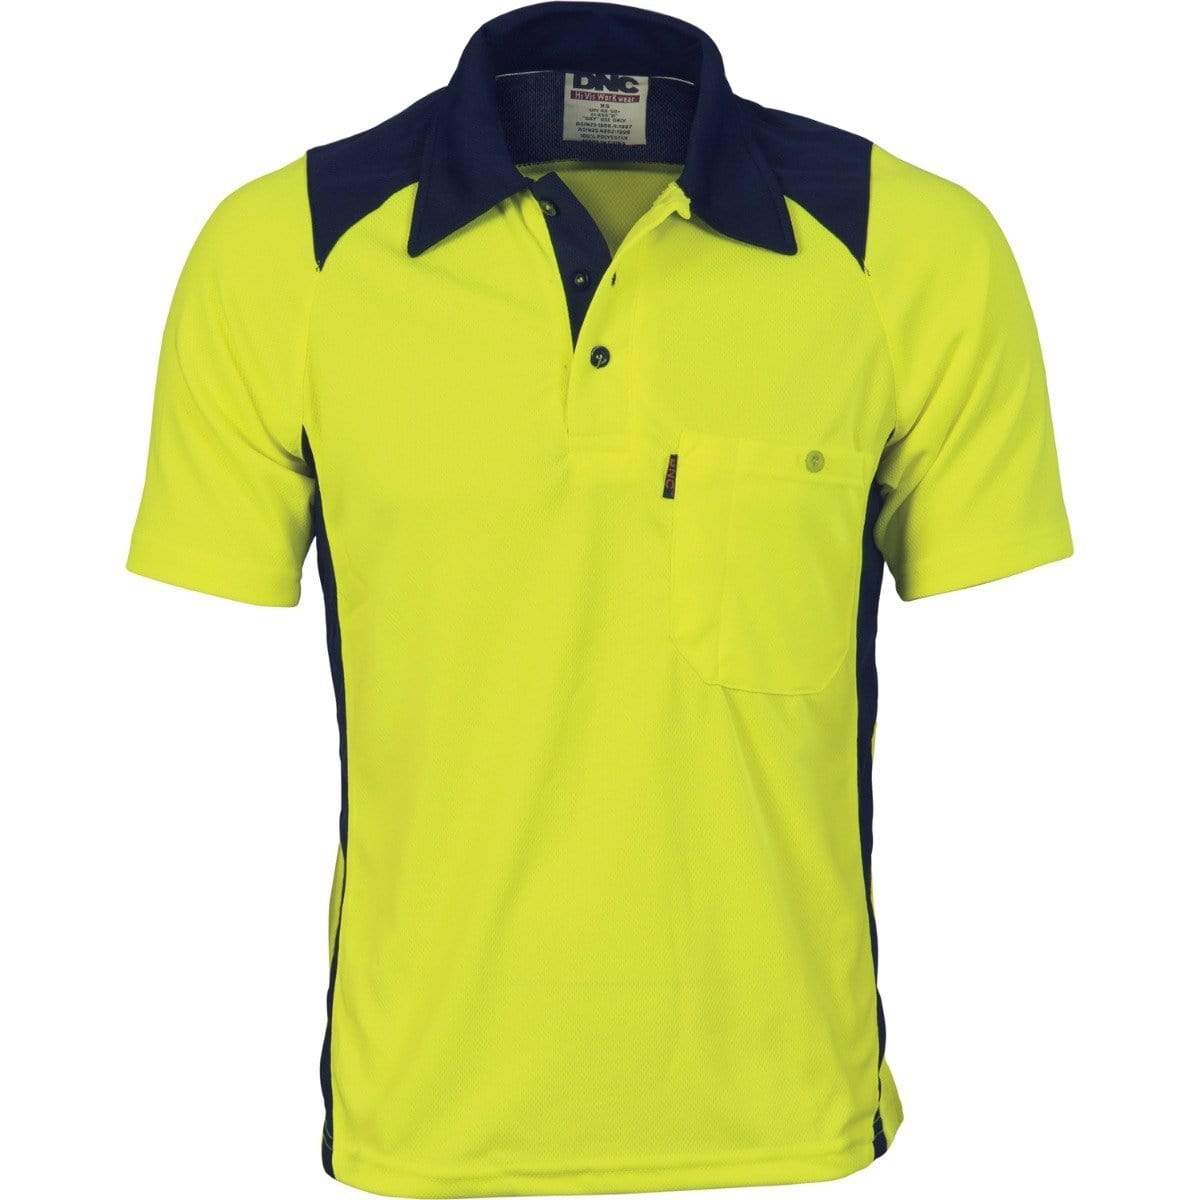 Dnc Workwear Cool Breathe Short Sleeve Action Polo Shirt - 3893 Work Wear DNC Workwear Yellow/Navy XS 